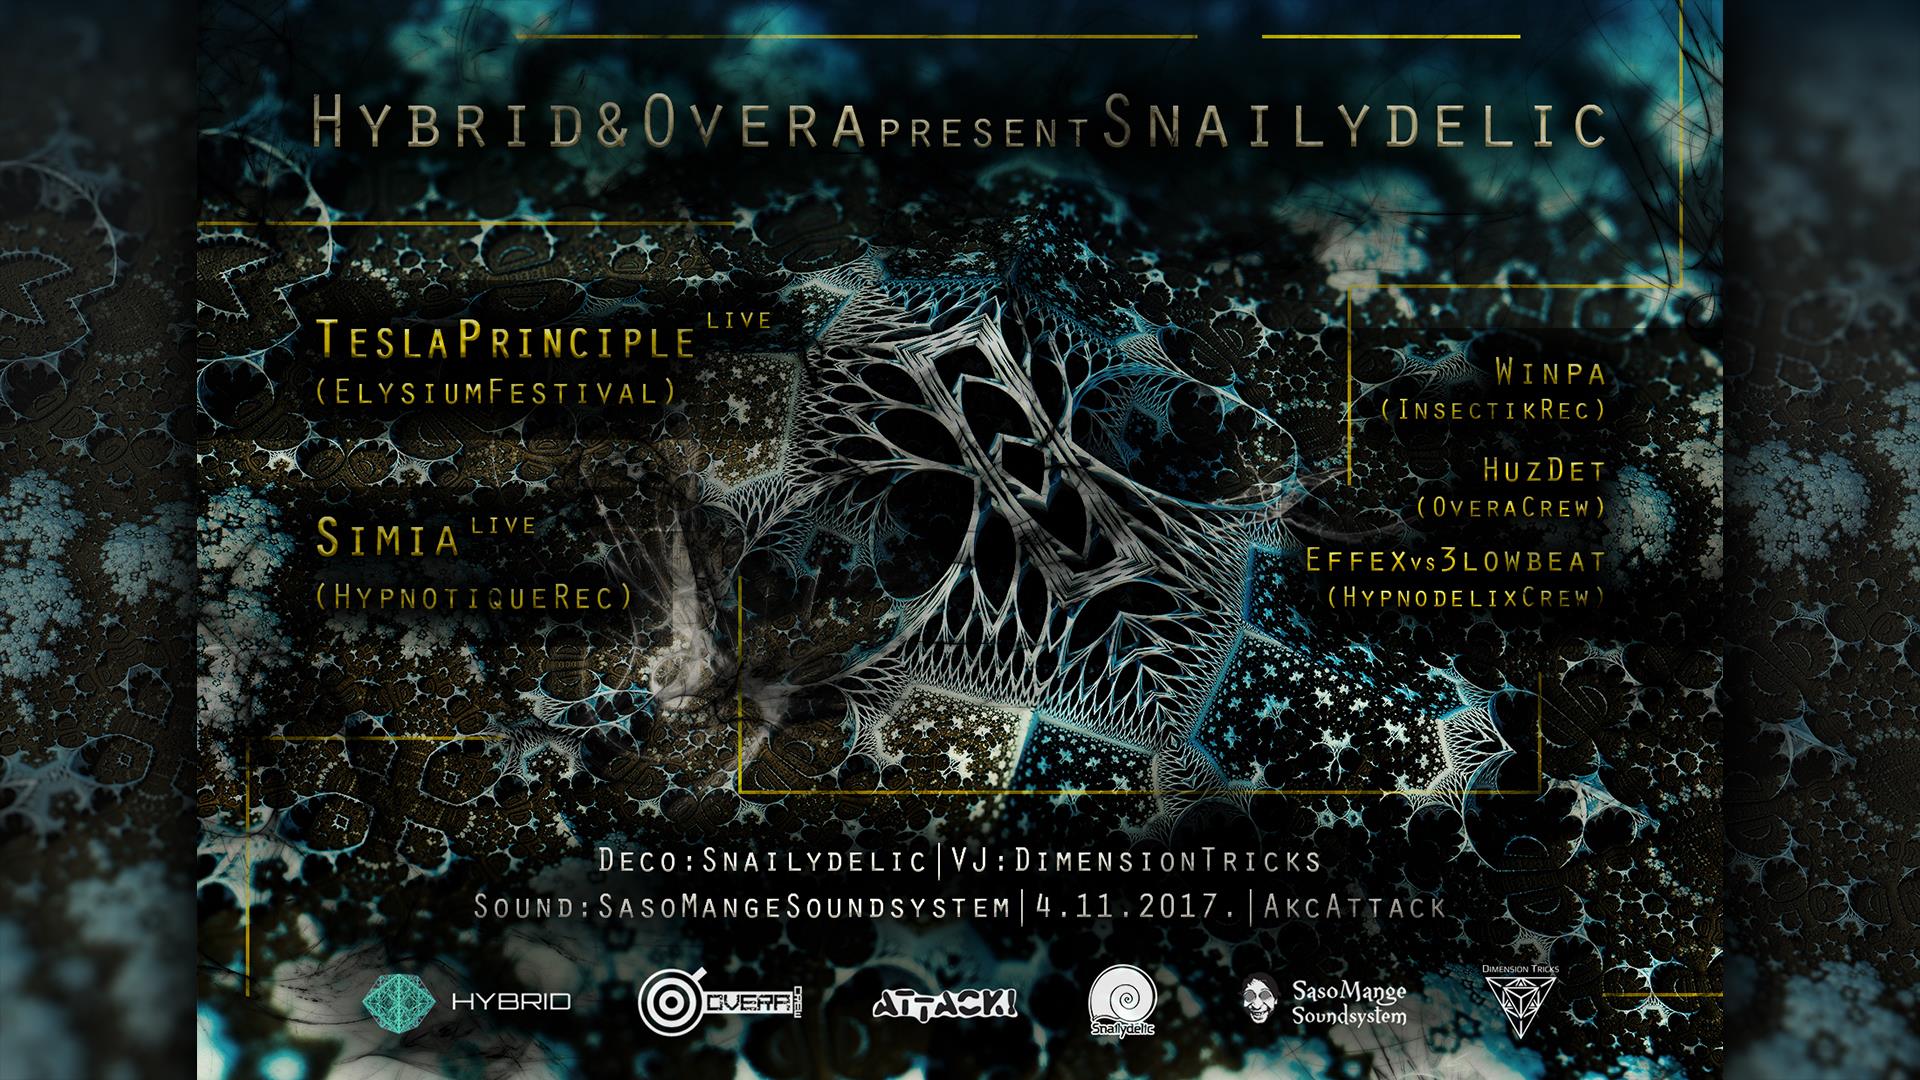 Hybrid & Overa presents Snailydelic crew 11.11.2017. AKC Attack